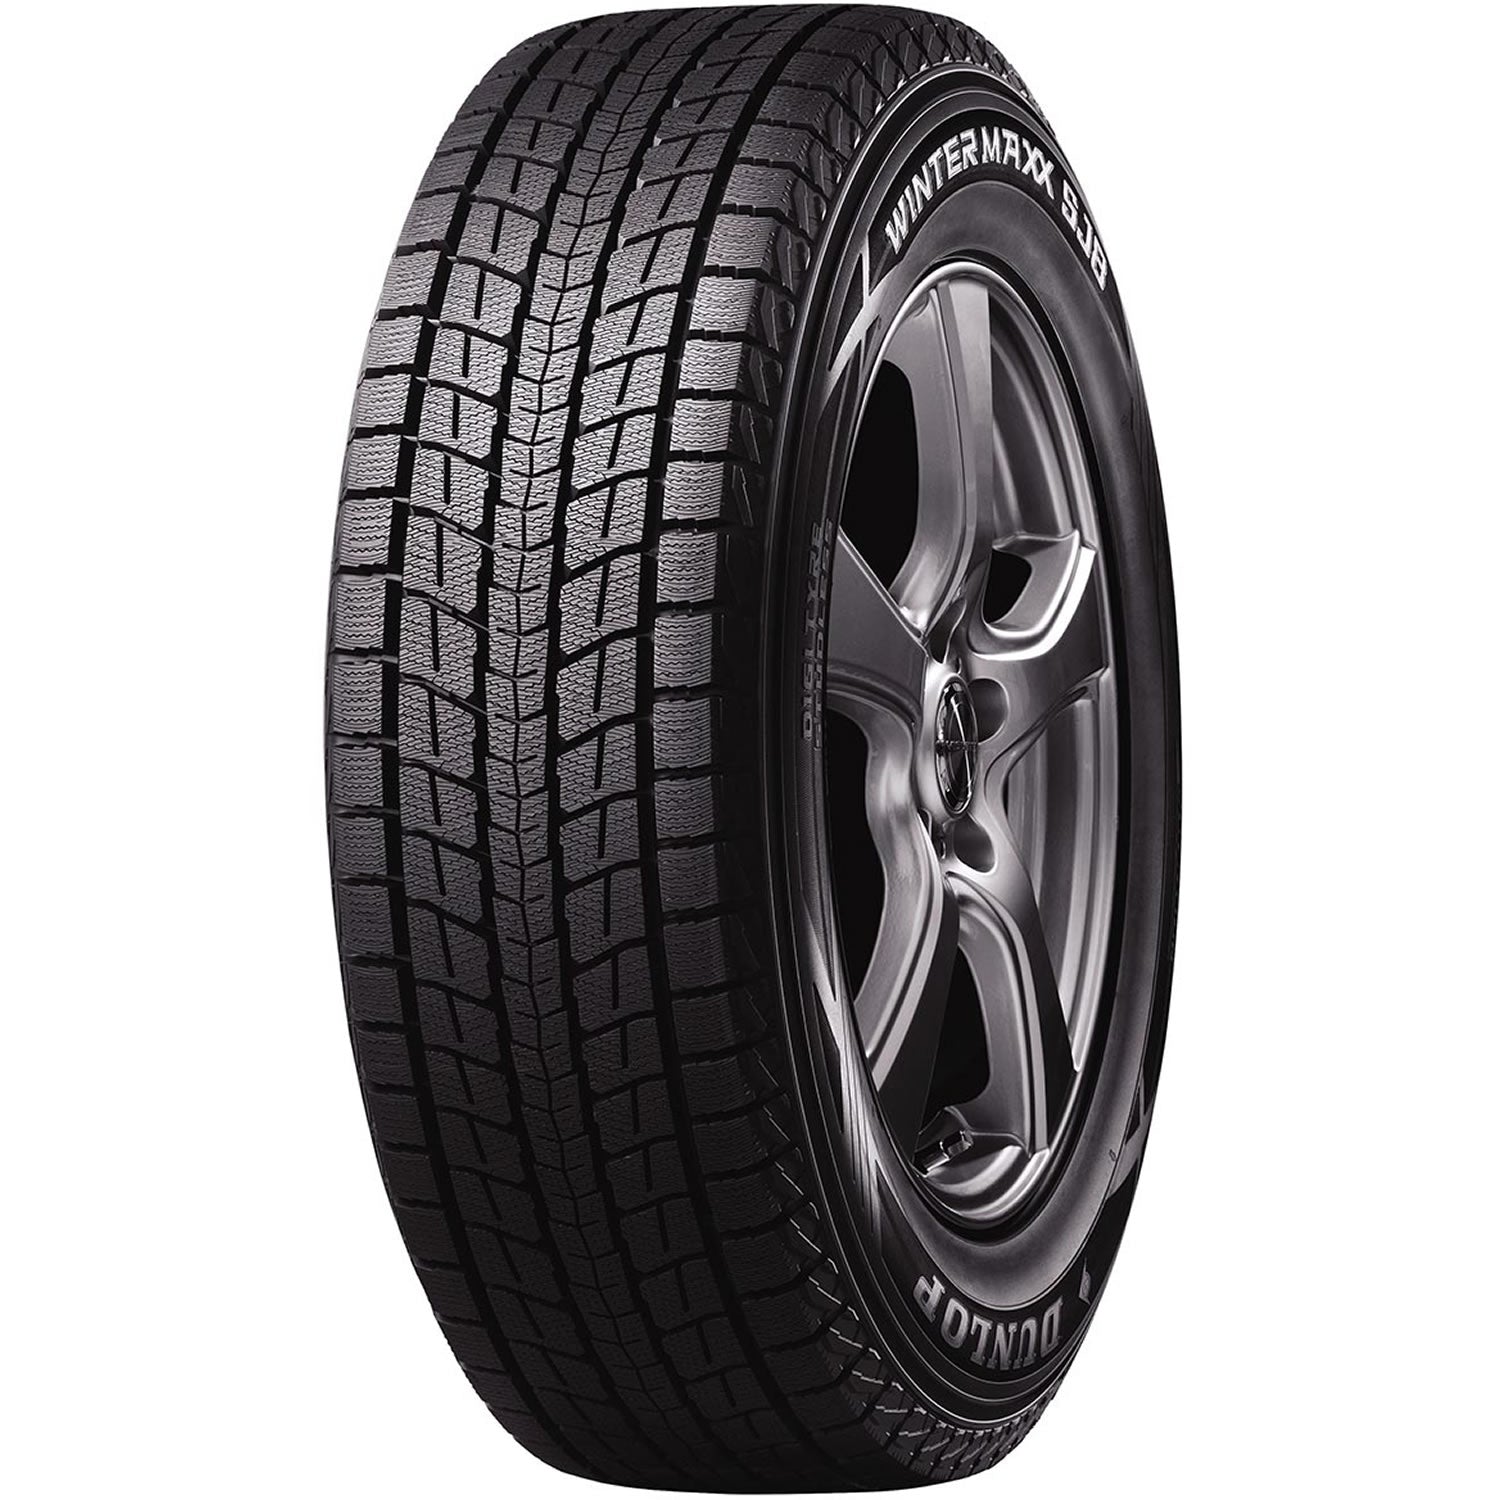 DUNLOP WINTER MAXX SJ8 265/50R20 (30.4X10.4R 20) Tires